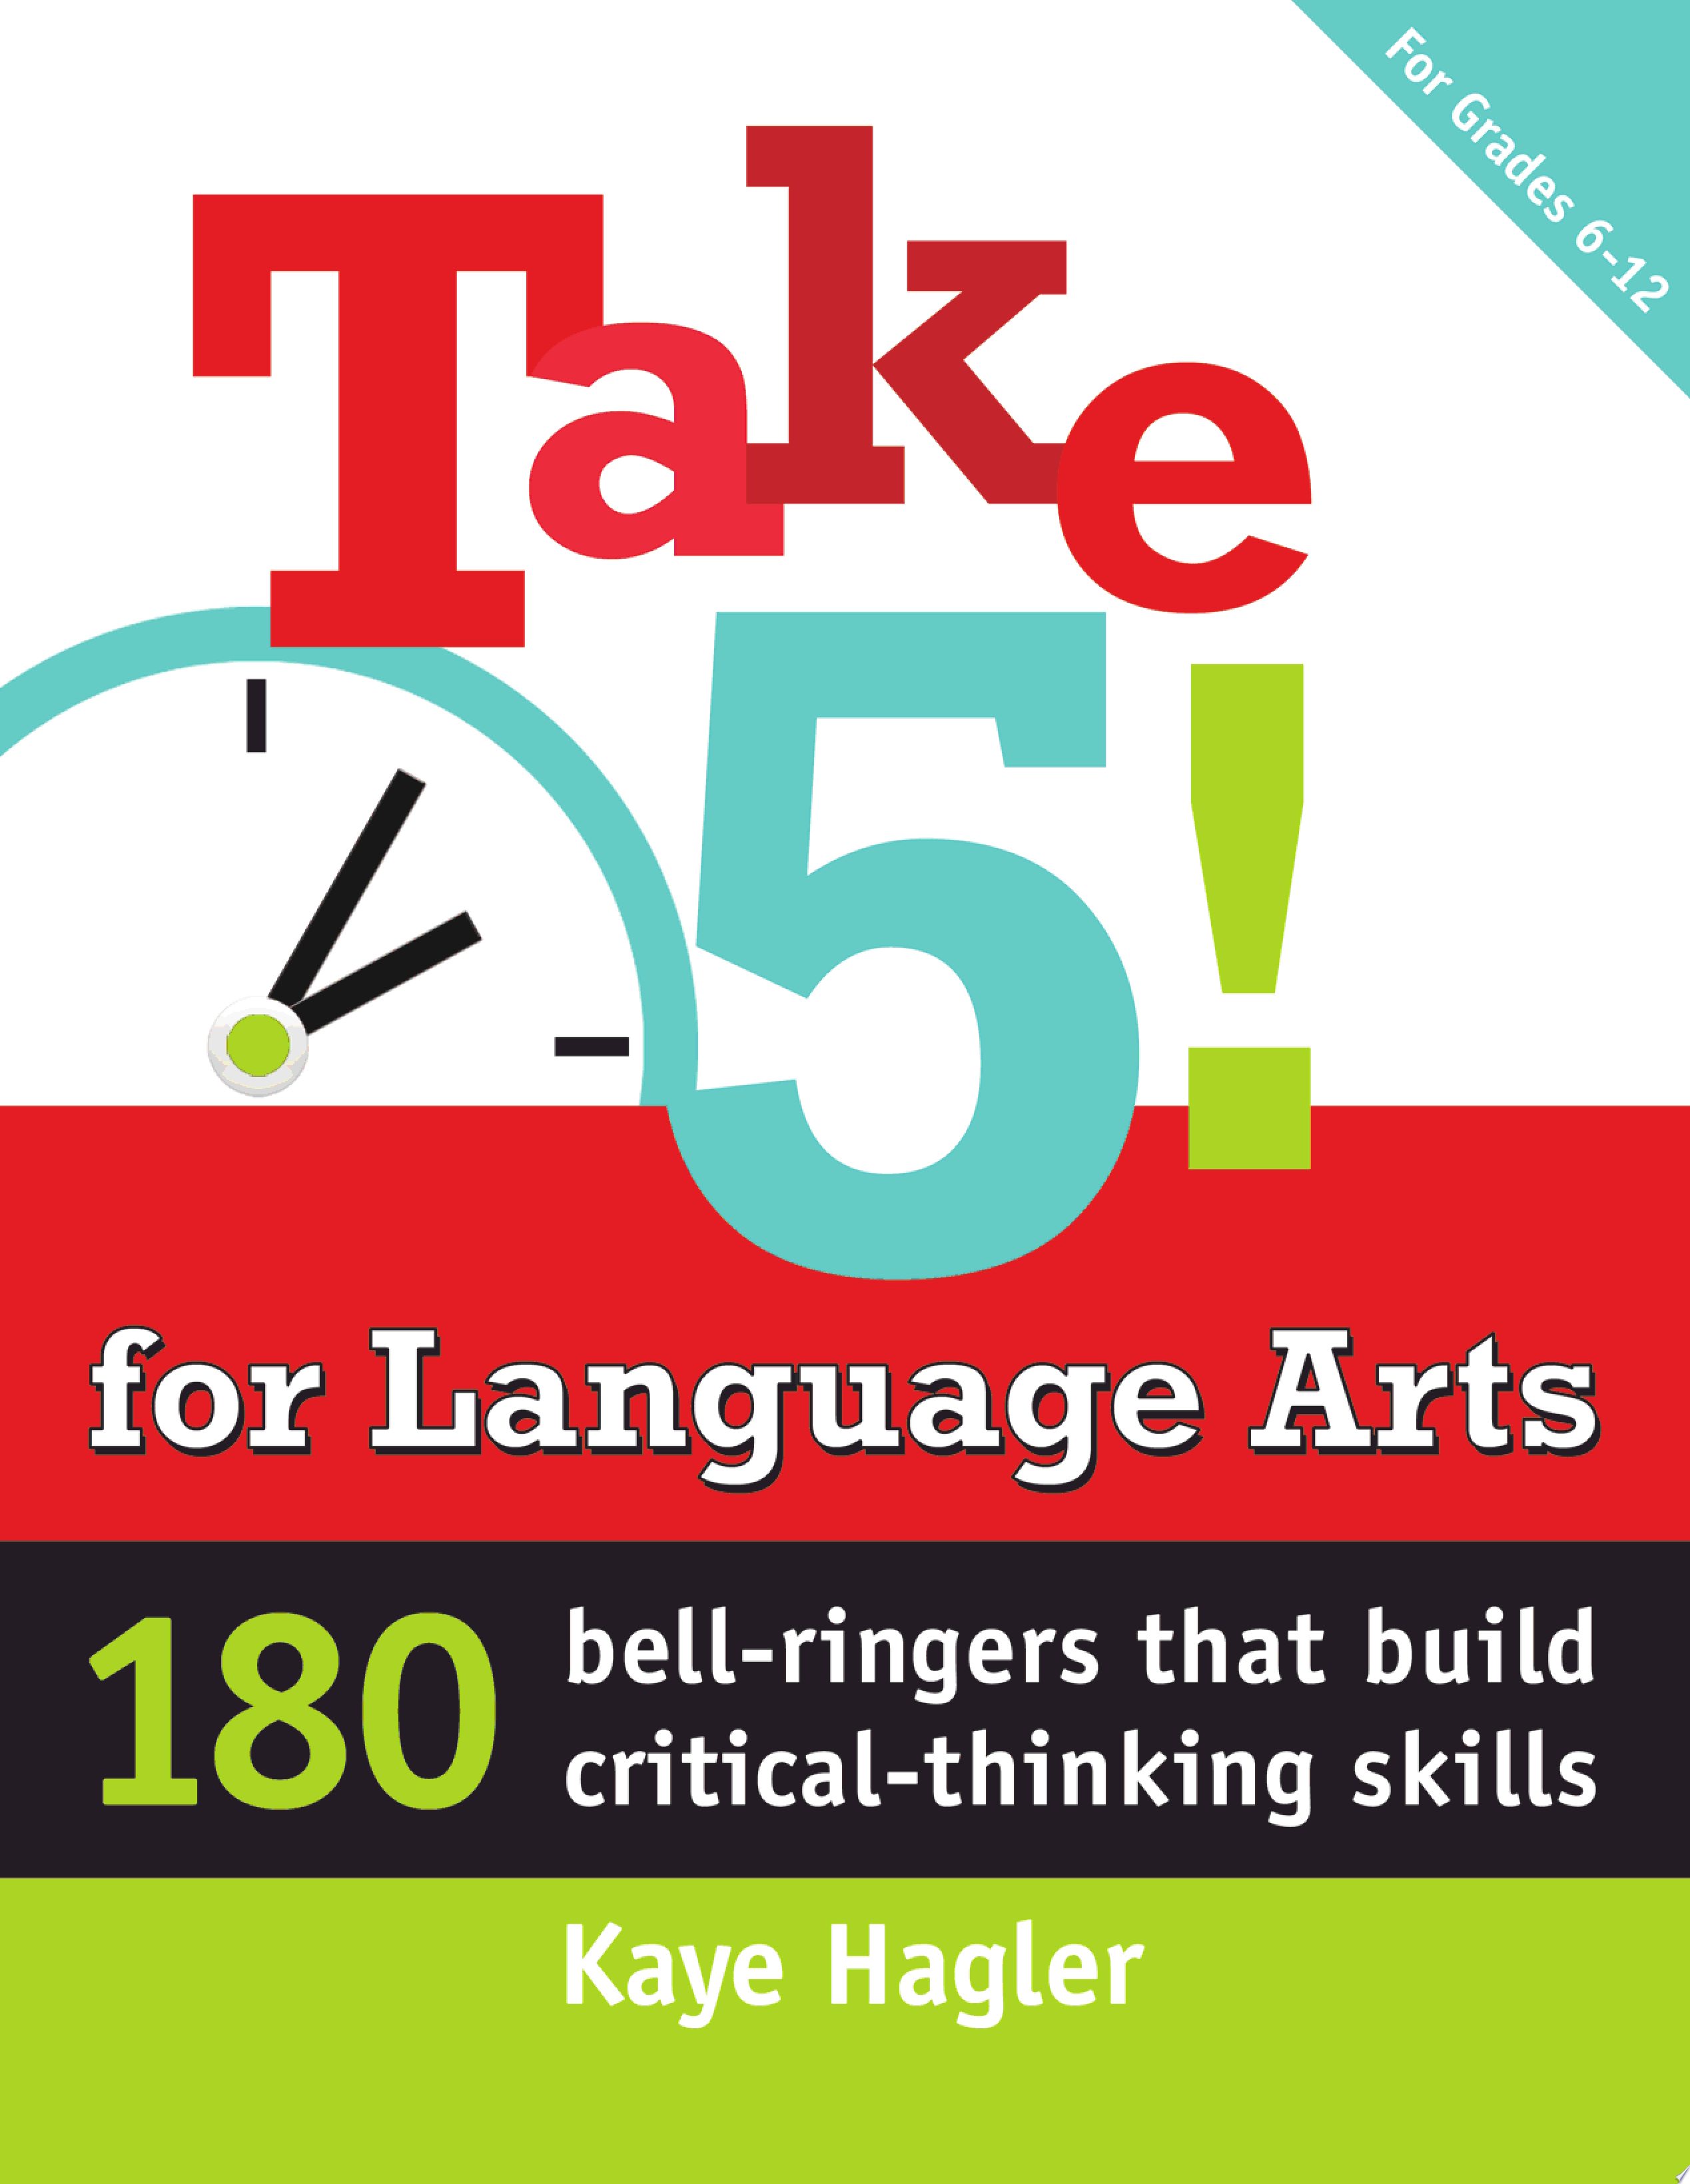 Image for "Take 5! For Language Arts"